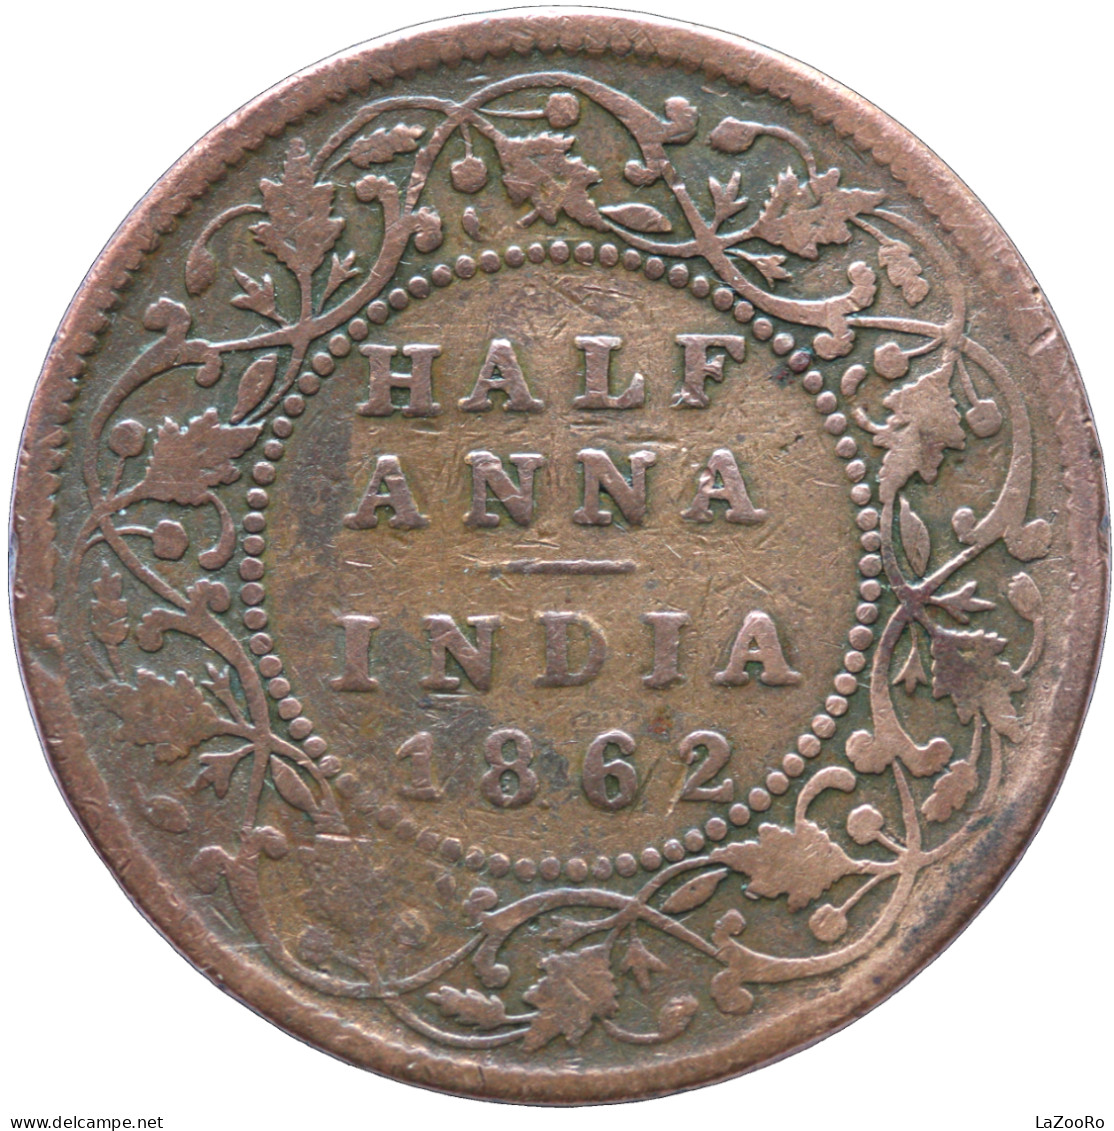 LaZooRo: British India 1/2 Anna 1862 F - Colonies